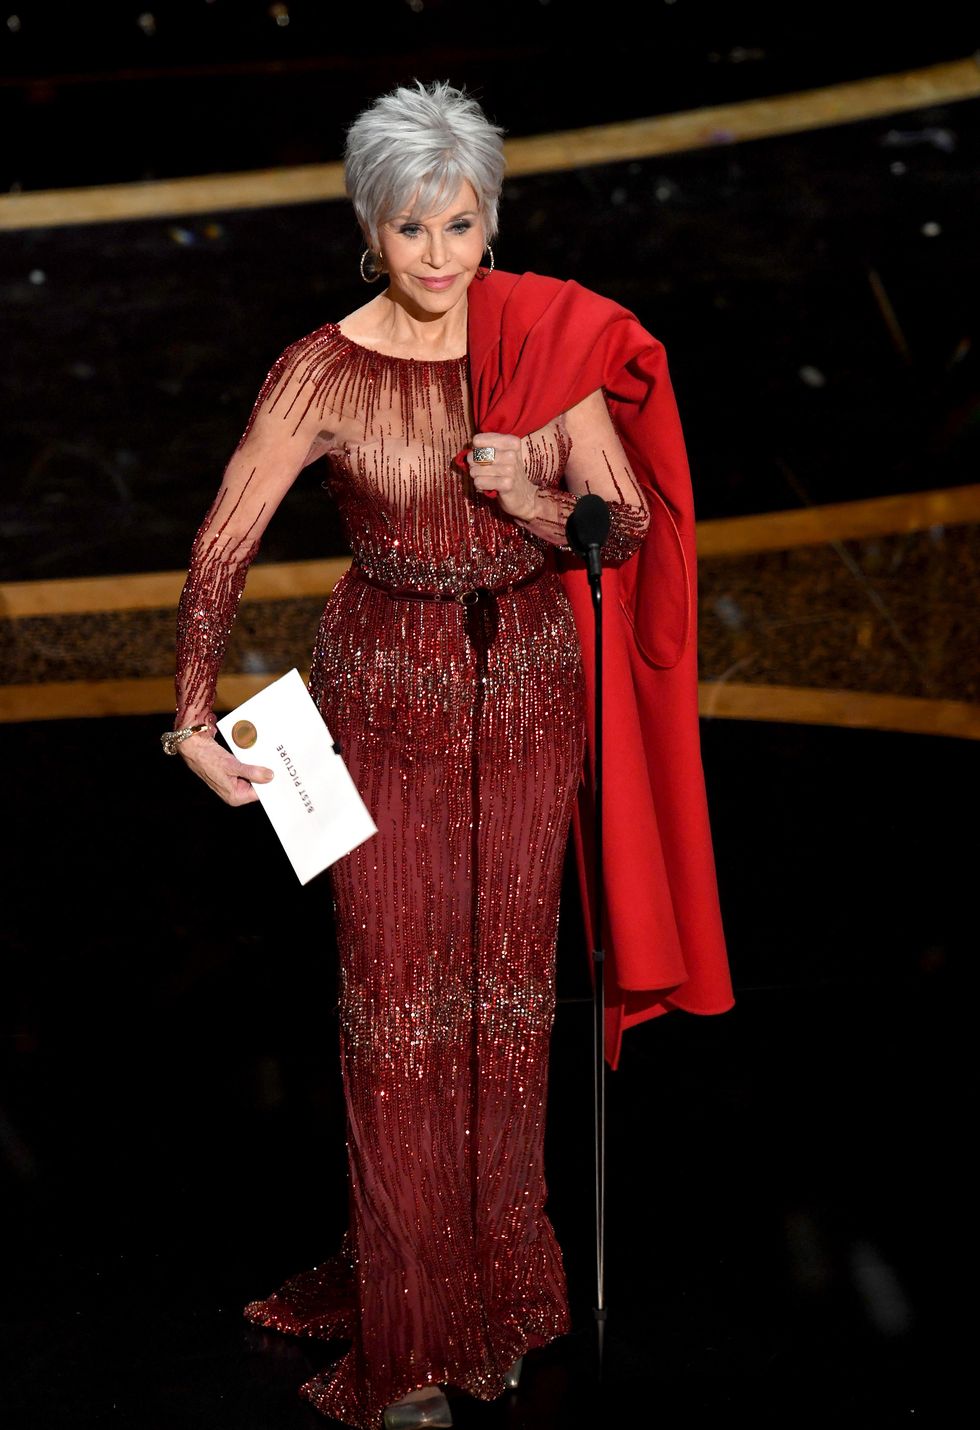 Jane Fonda Premios Oscar 2020 vestido abrigo rojo